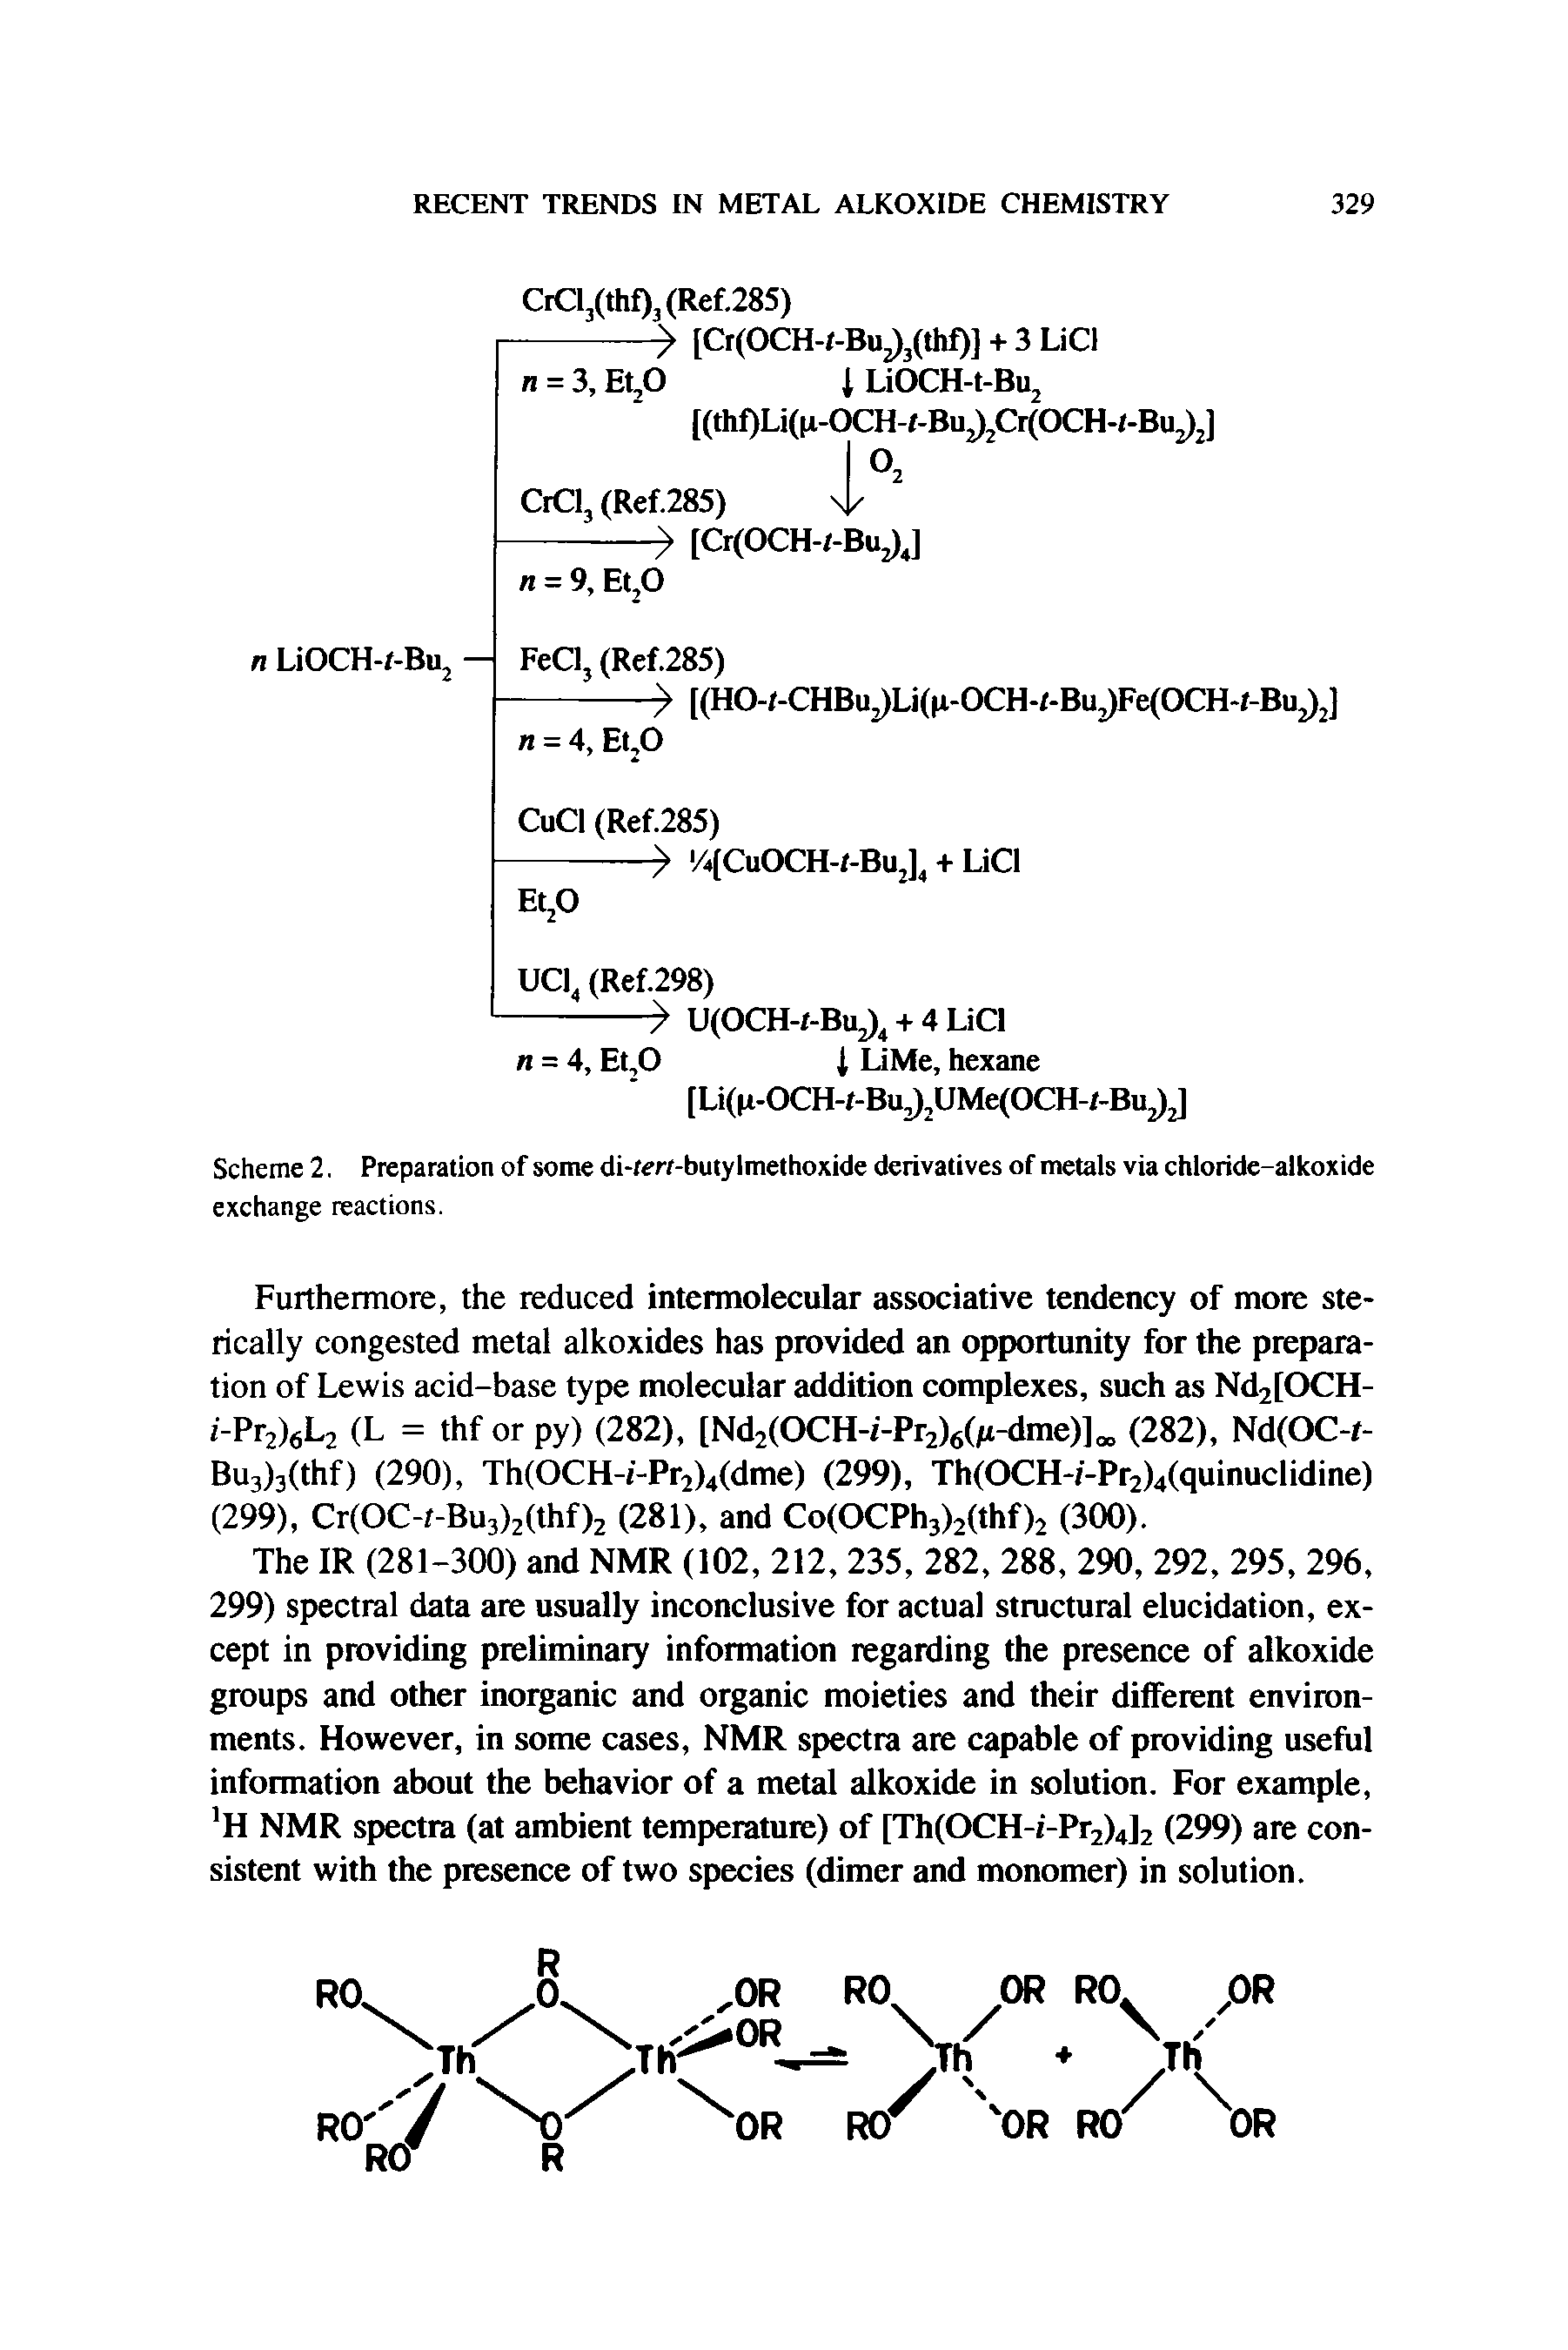 Scheme 2. Preparation of some di-rerr-buty Imethoxide derivatives of metals via chloride-alkoxide exchange reactions.